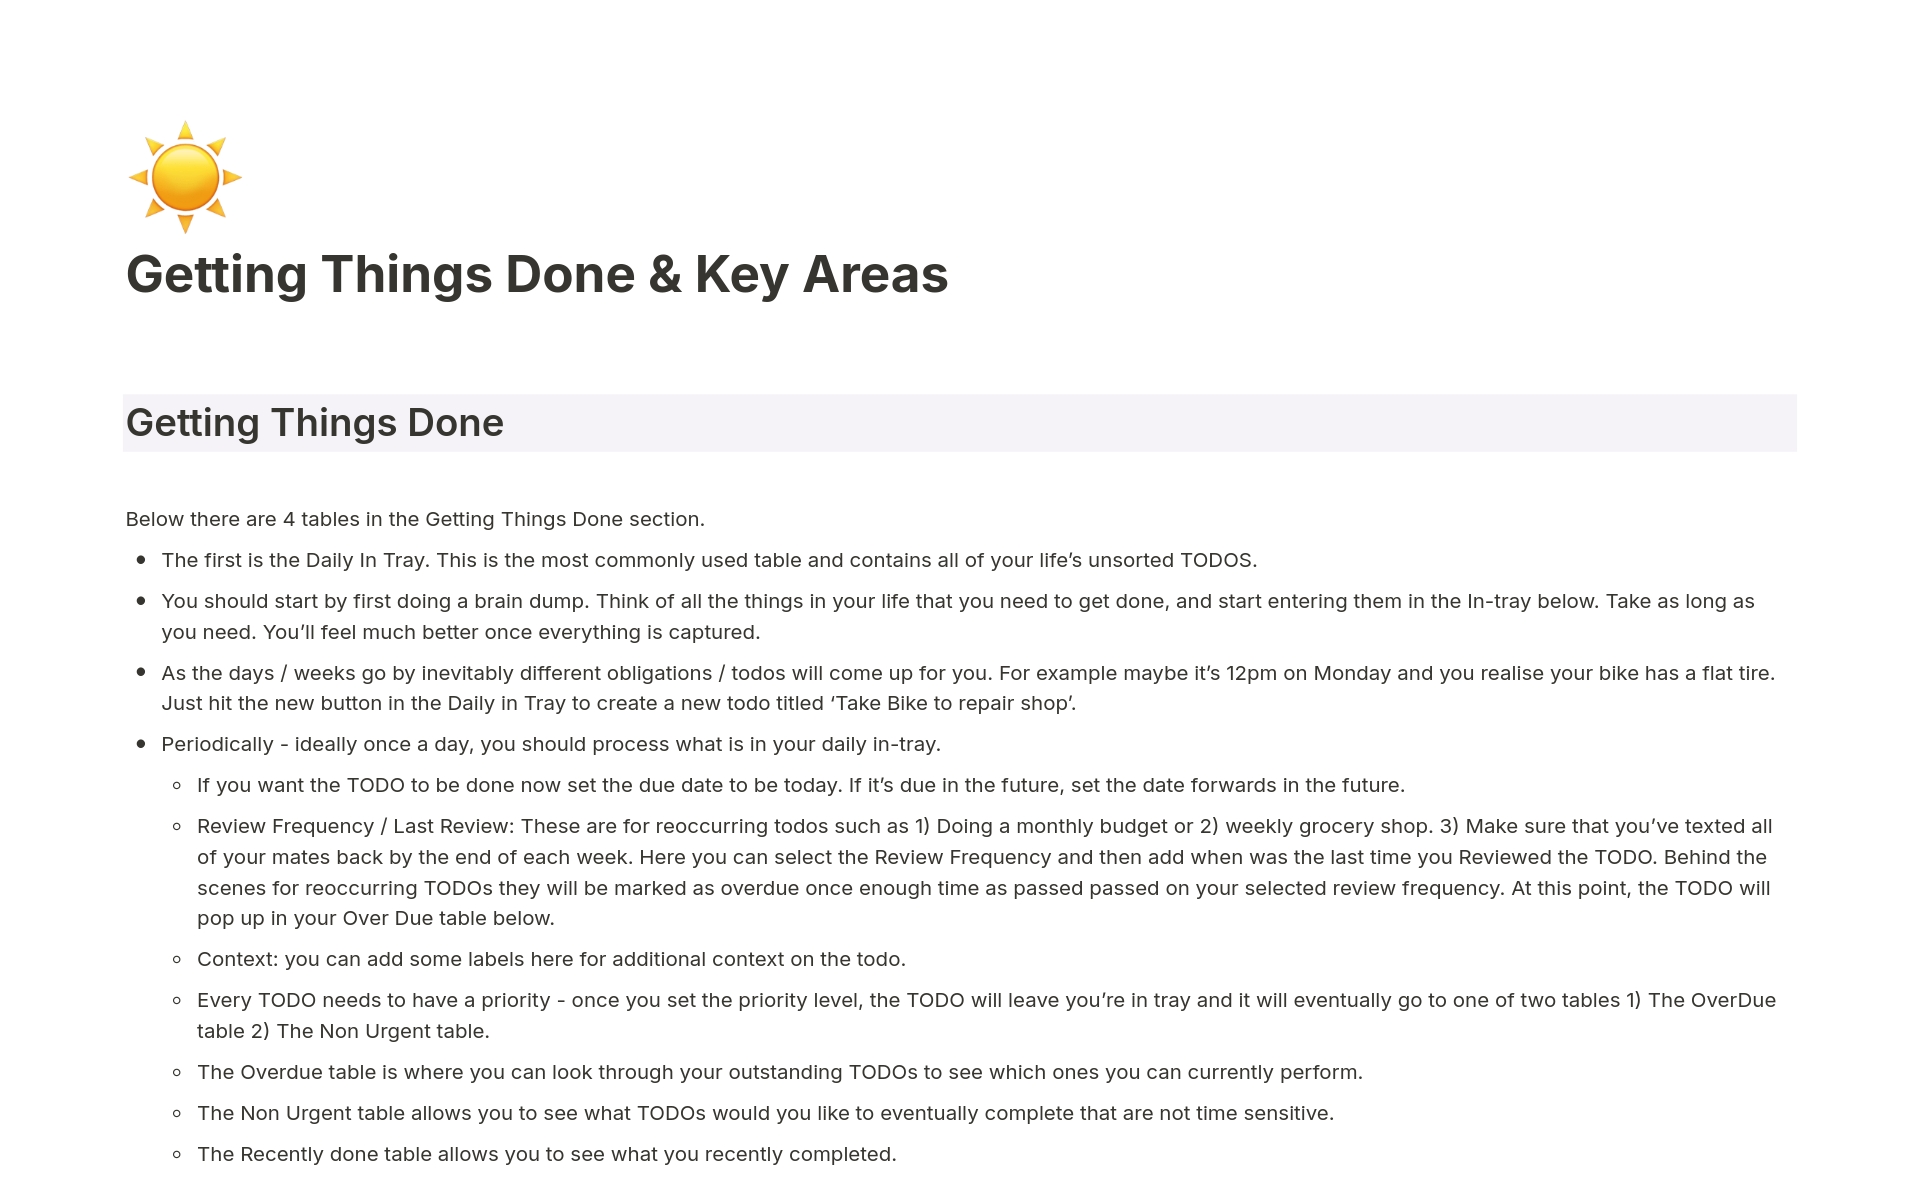 Aperçu du modèle de Getting Things Done & Key Areas